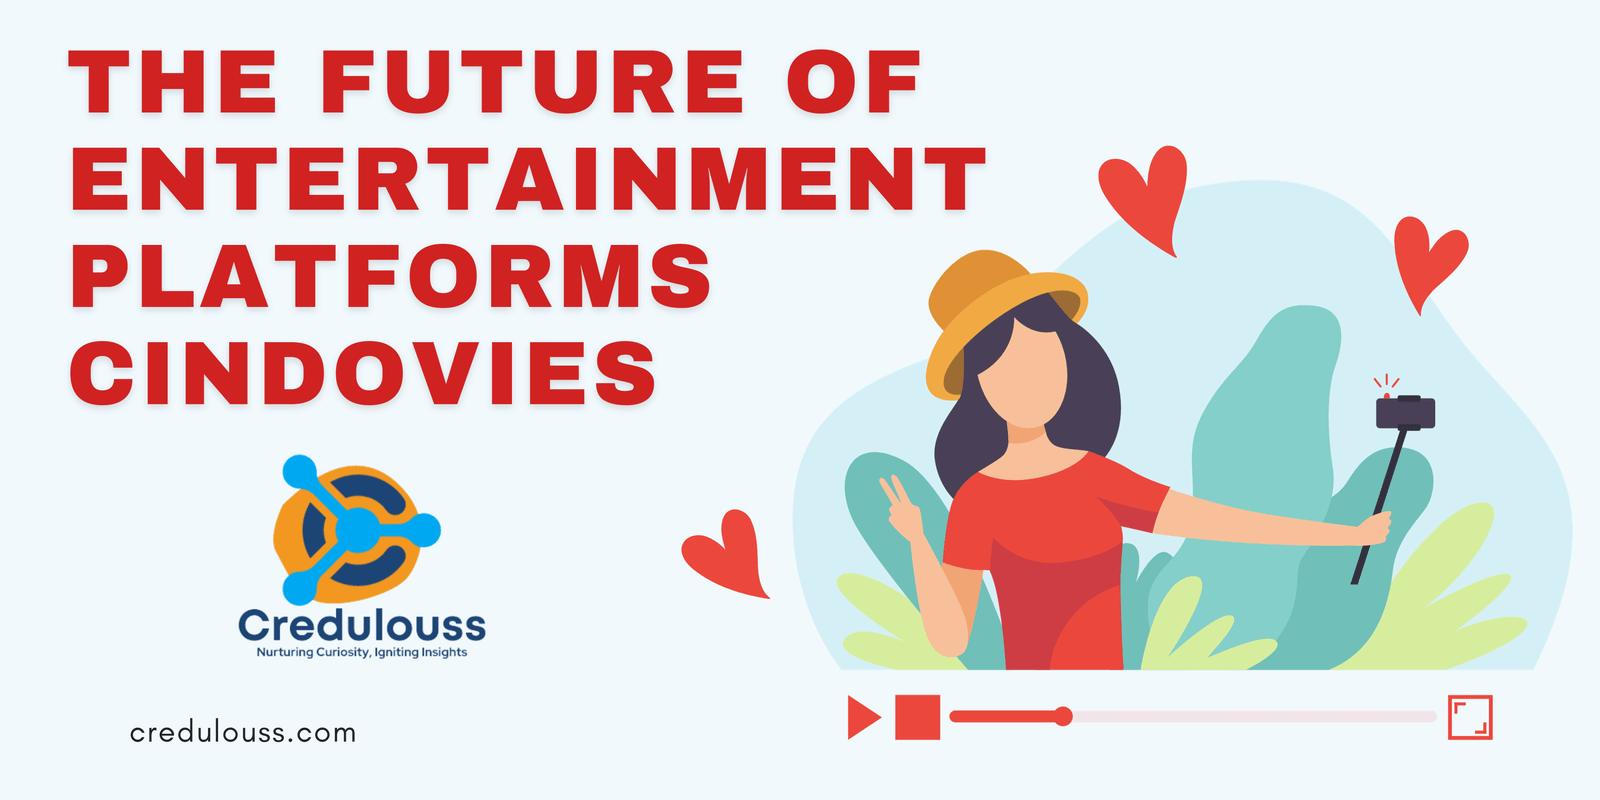 The Future of Entertainment Platforms Cindovies